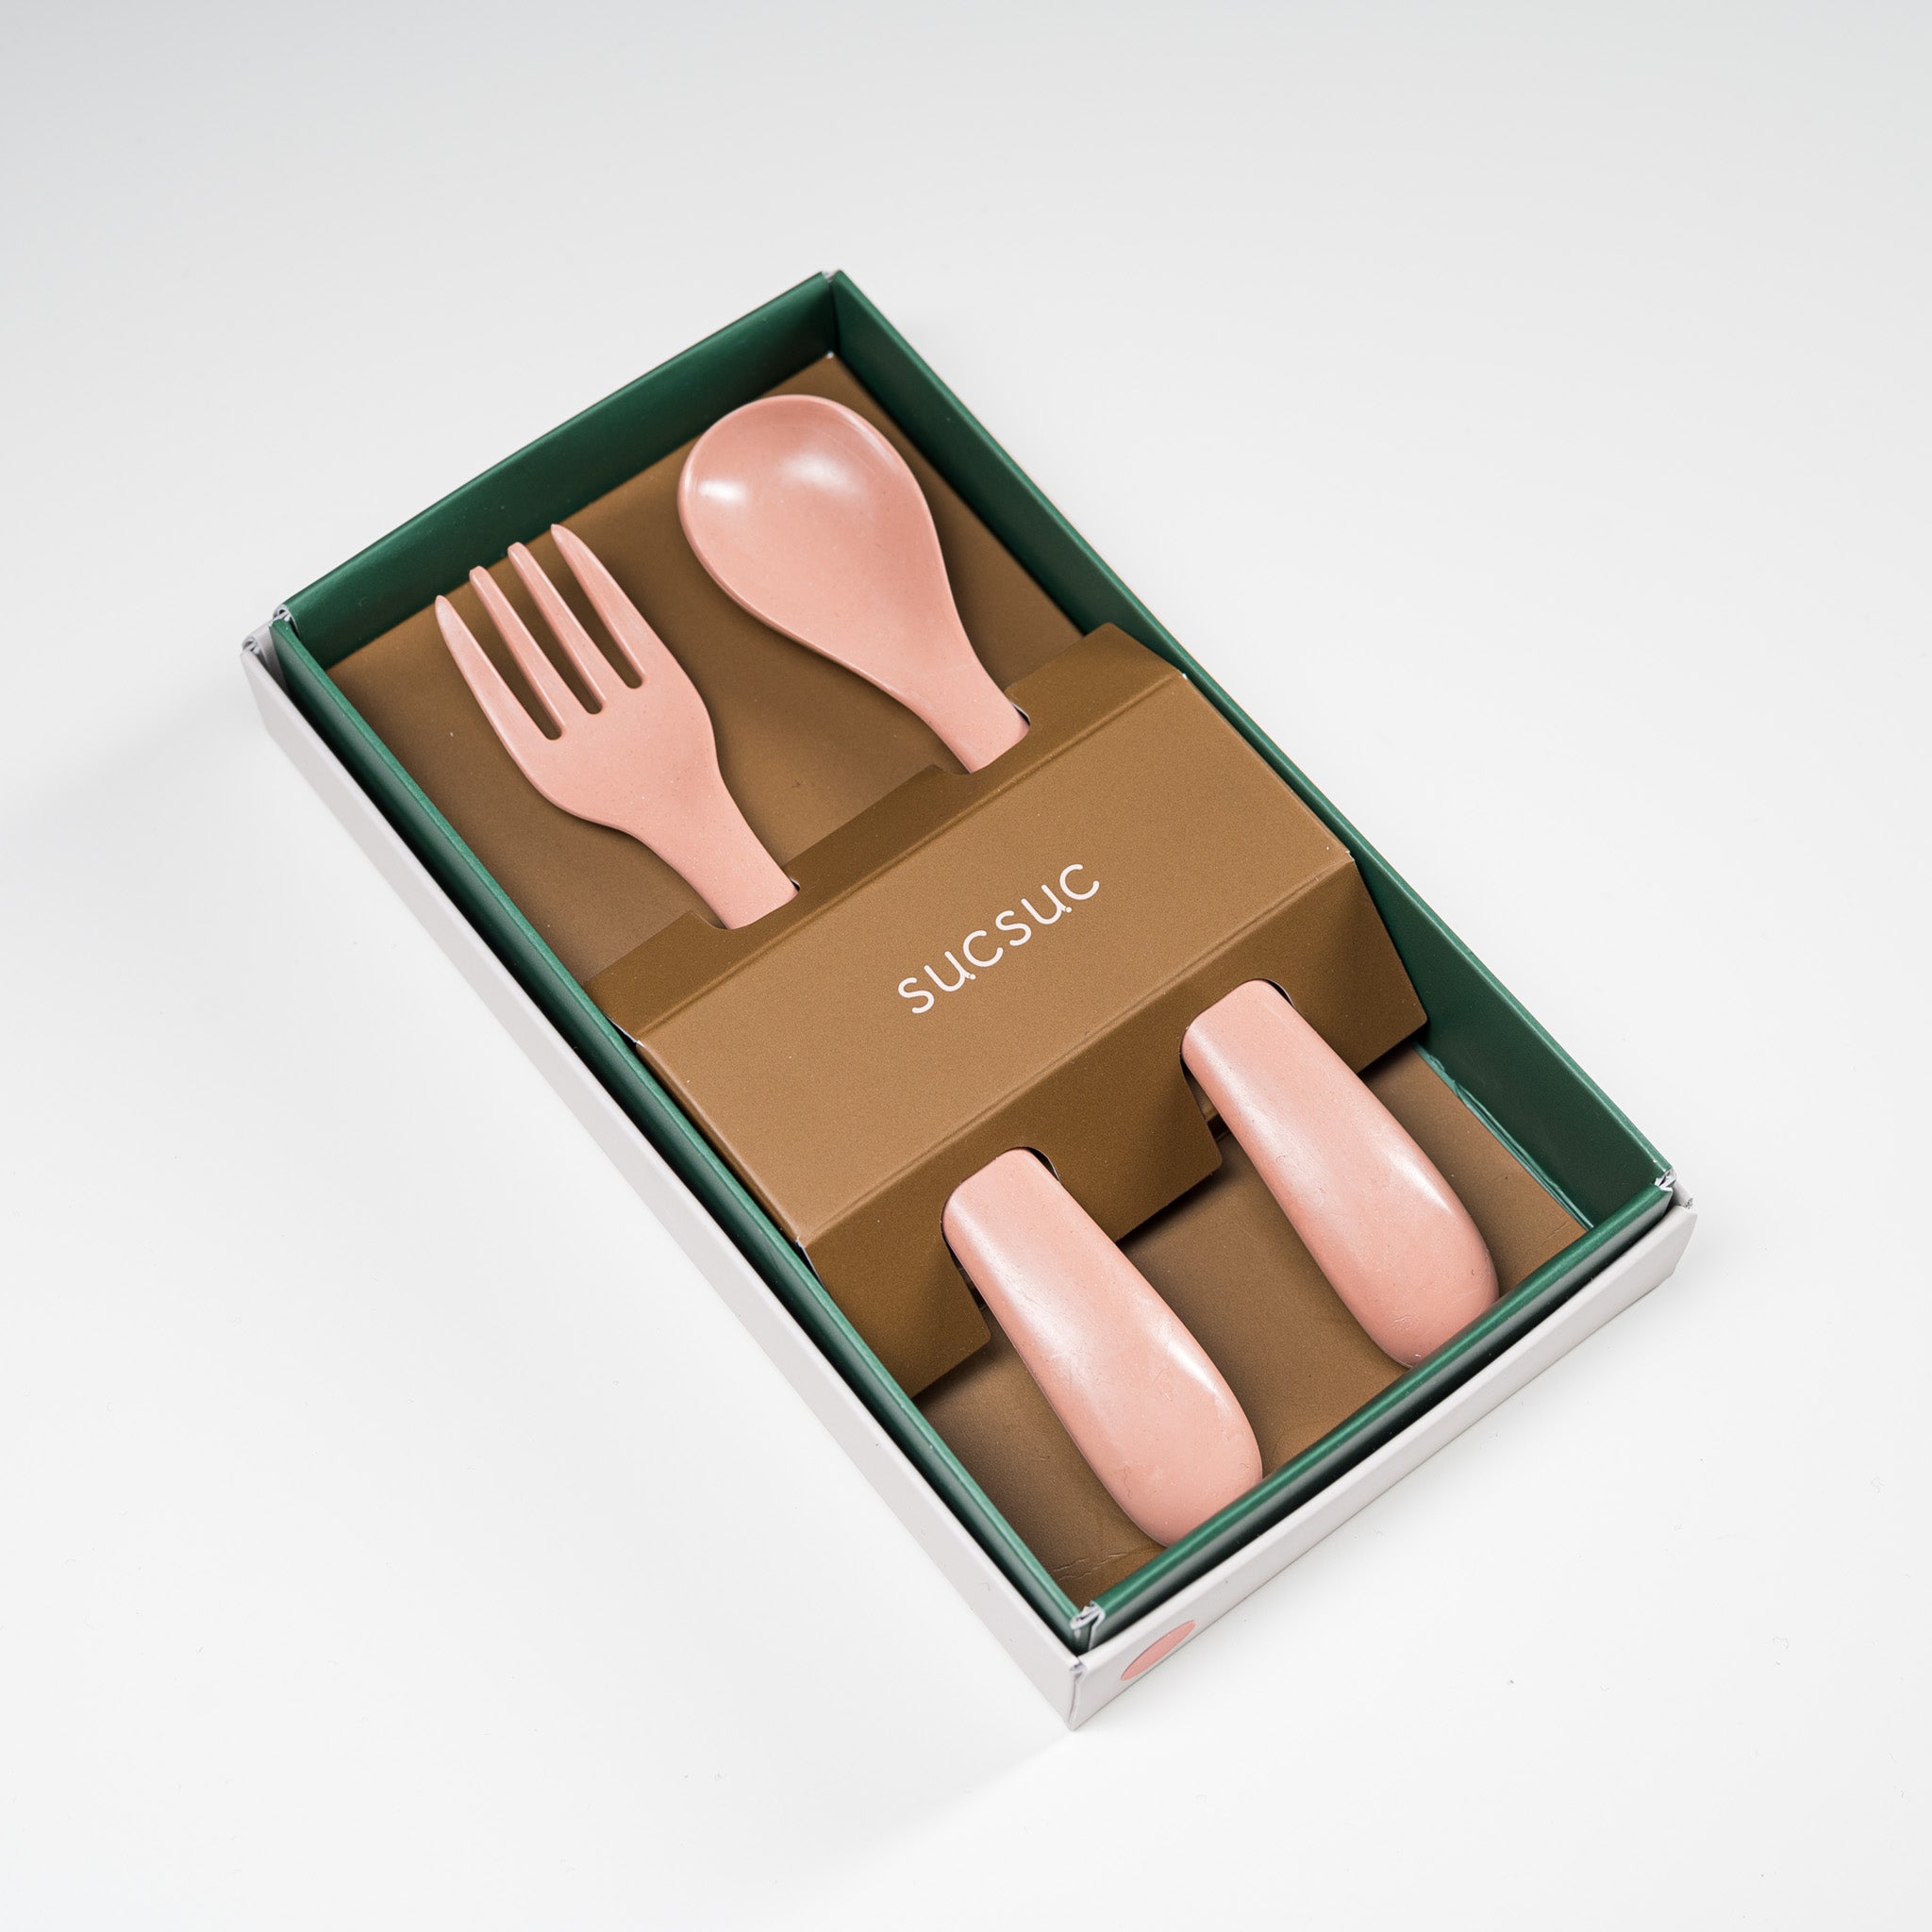 "SUCSUC" Antibacterial Kids Cutlery Set - 3 Colour Options